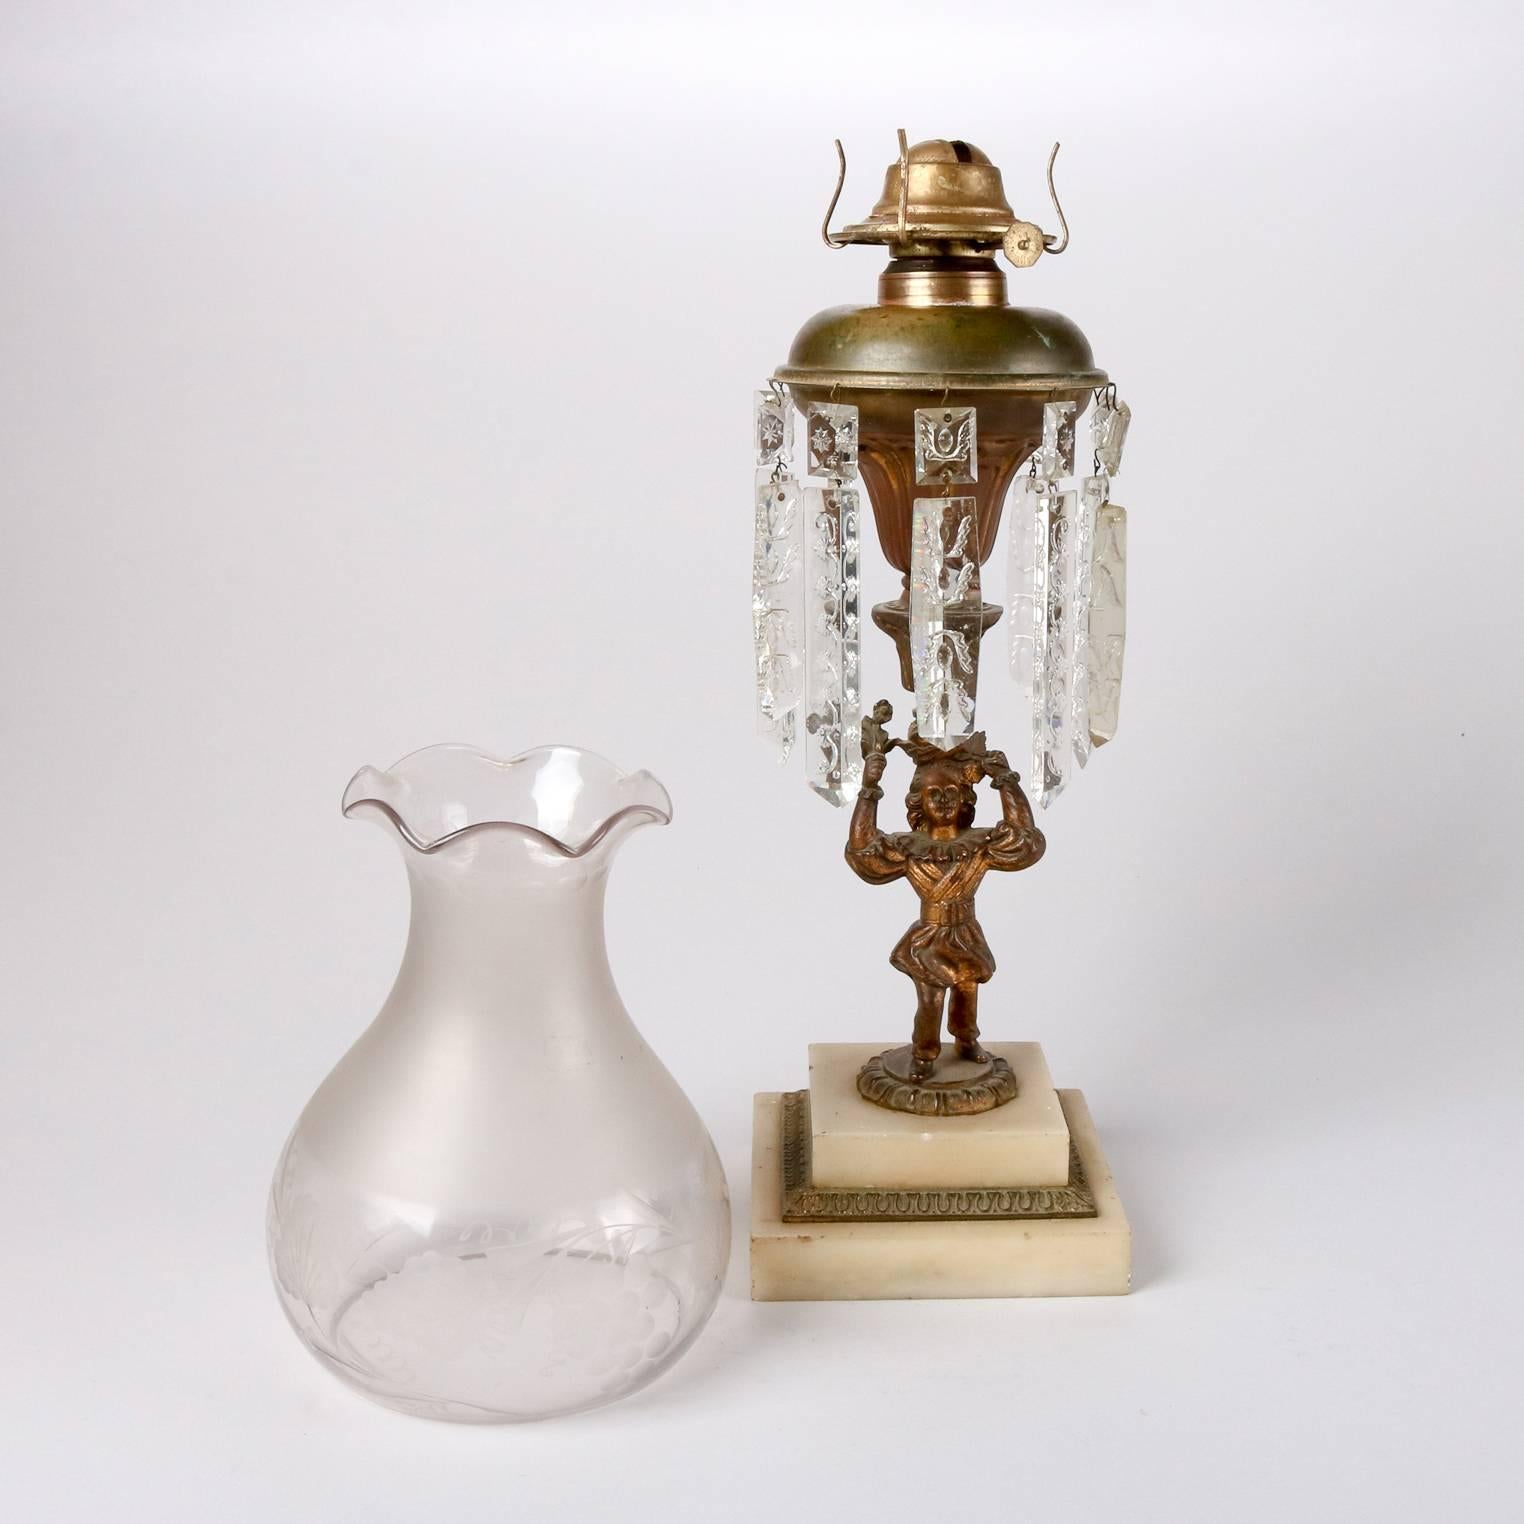 19th Century Antique English Early Original Figural Bronze Solar Lamp, Cut-Glass Prisms